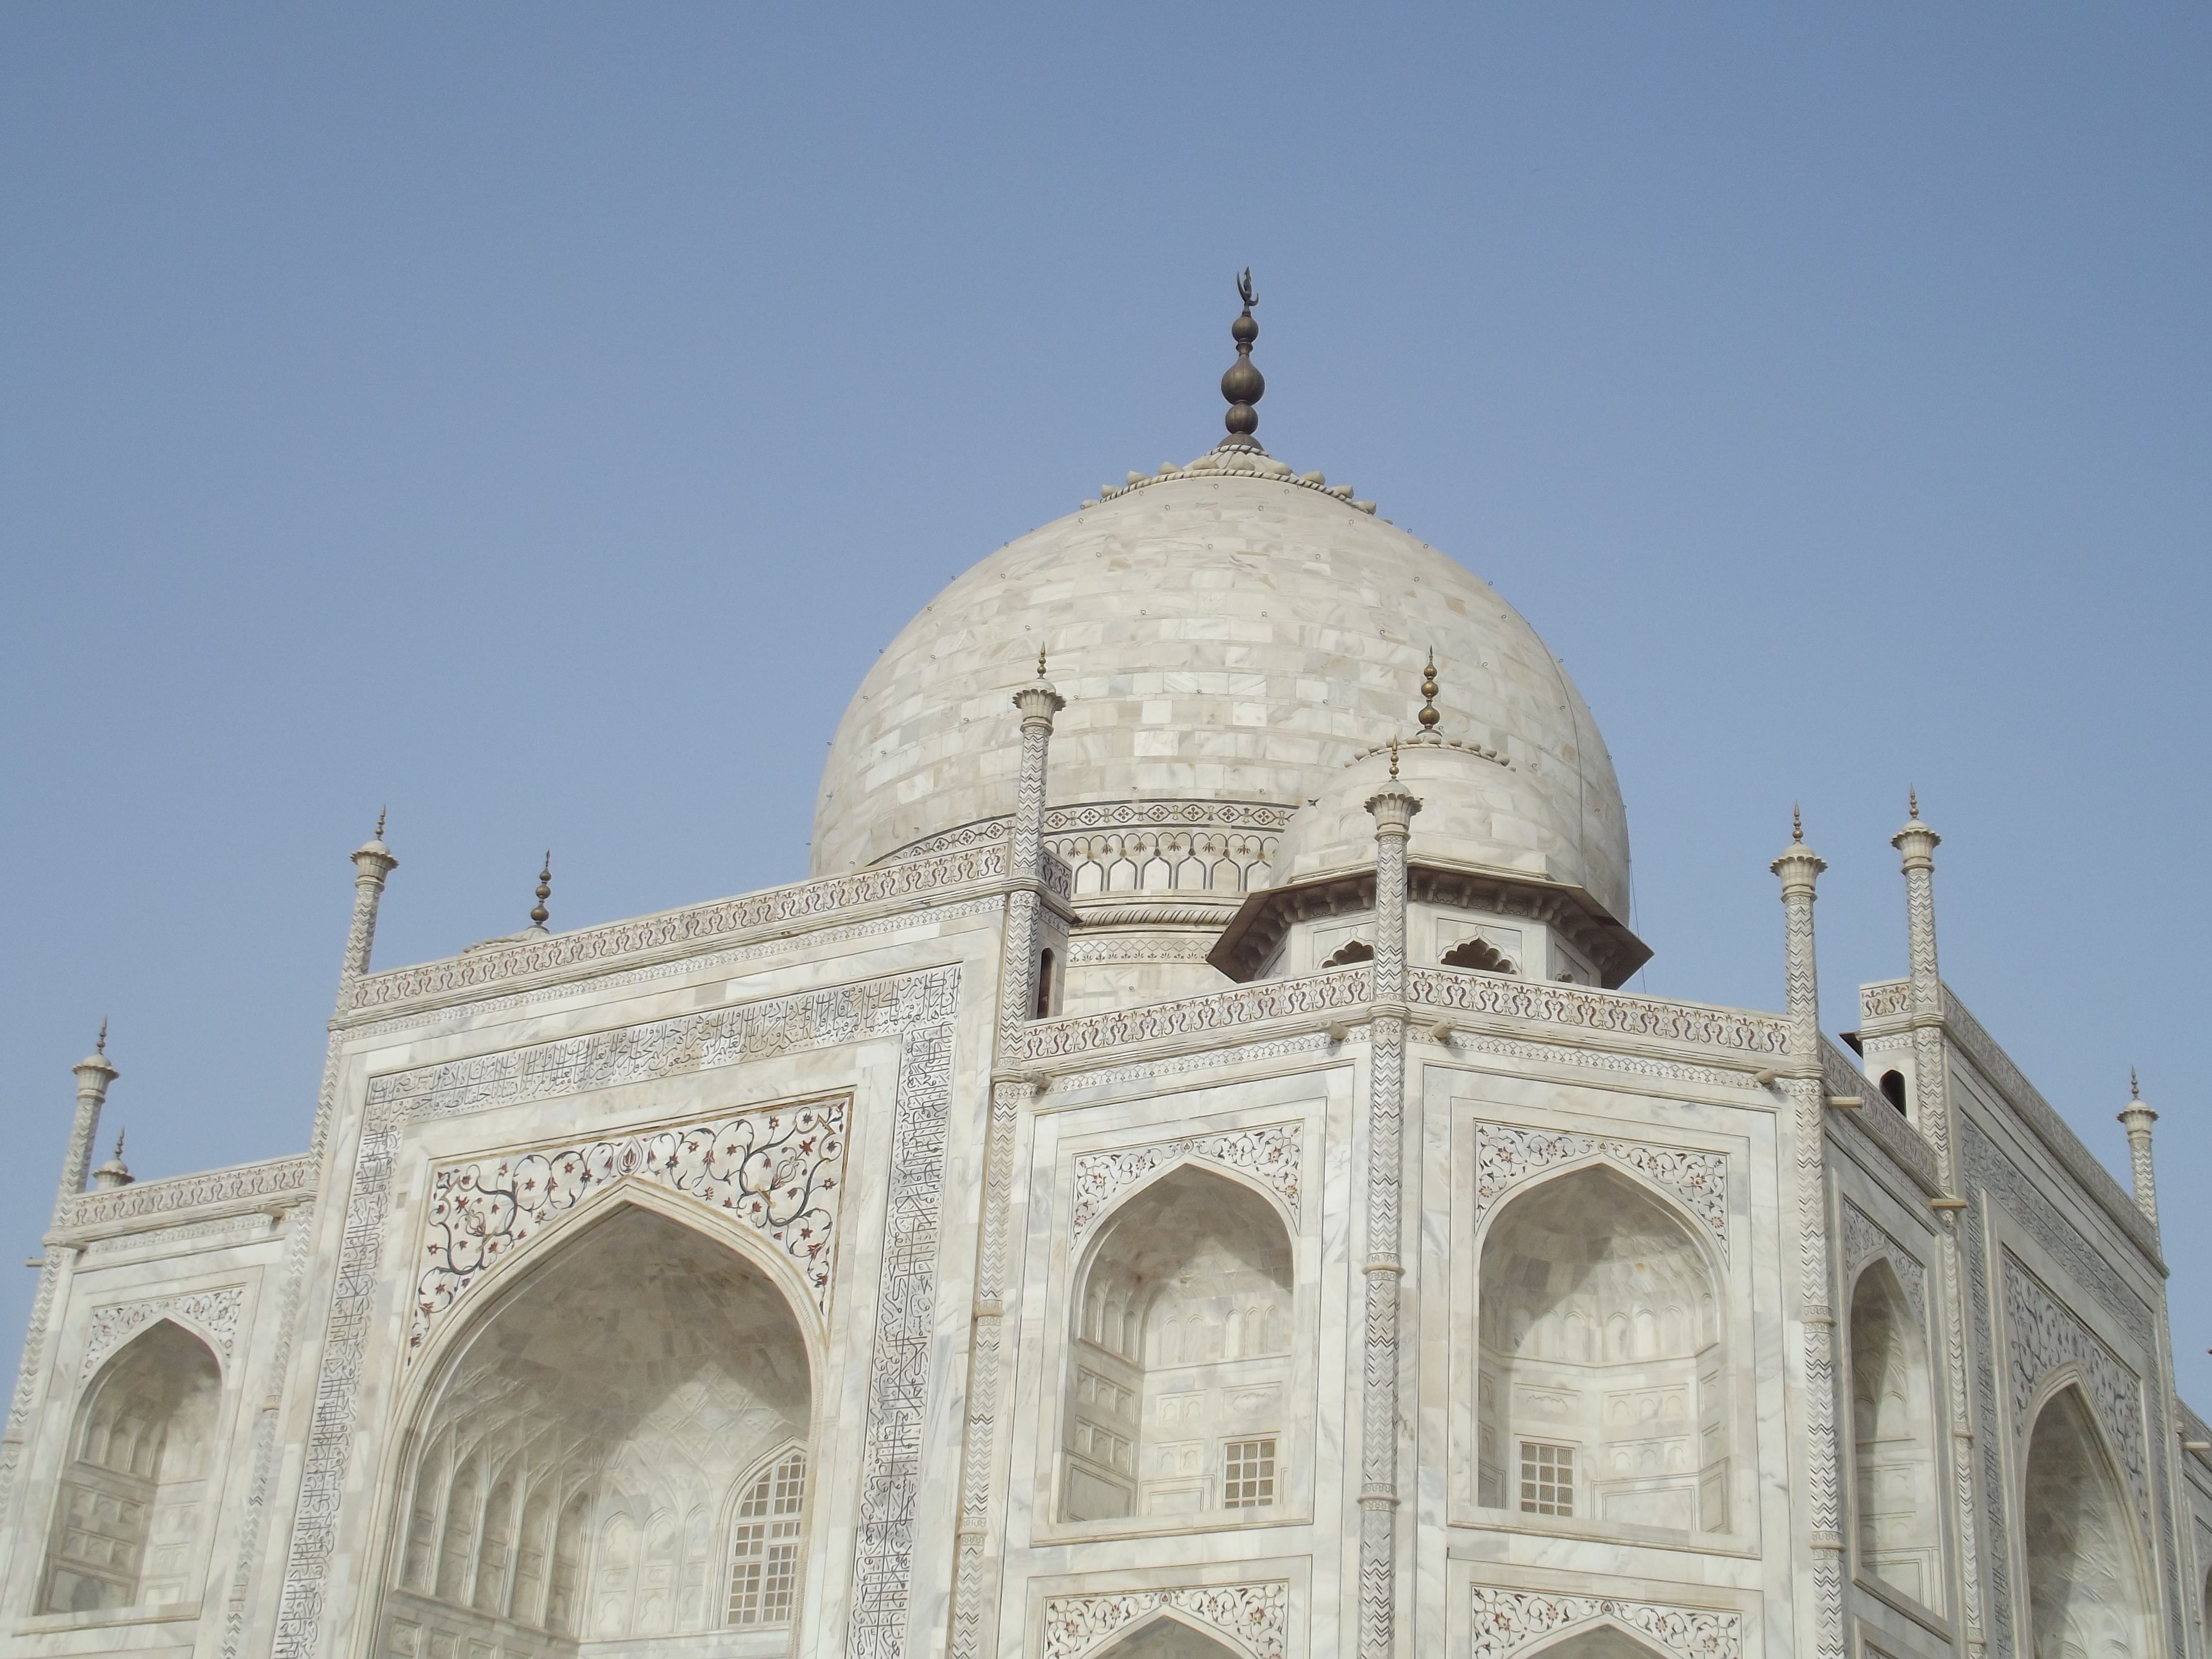 Close up of the Taj